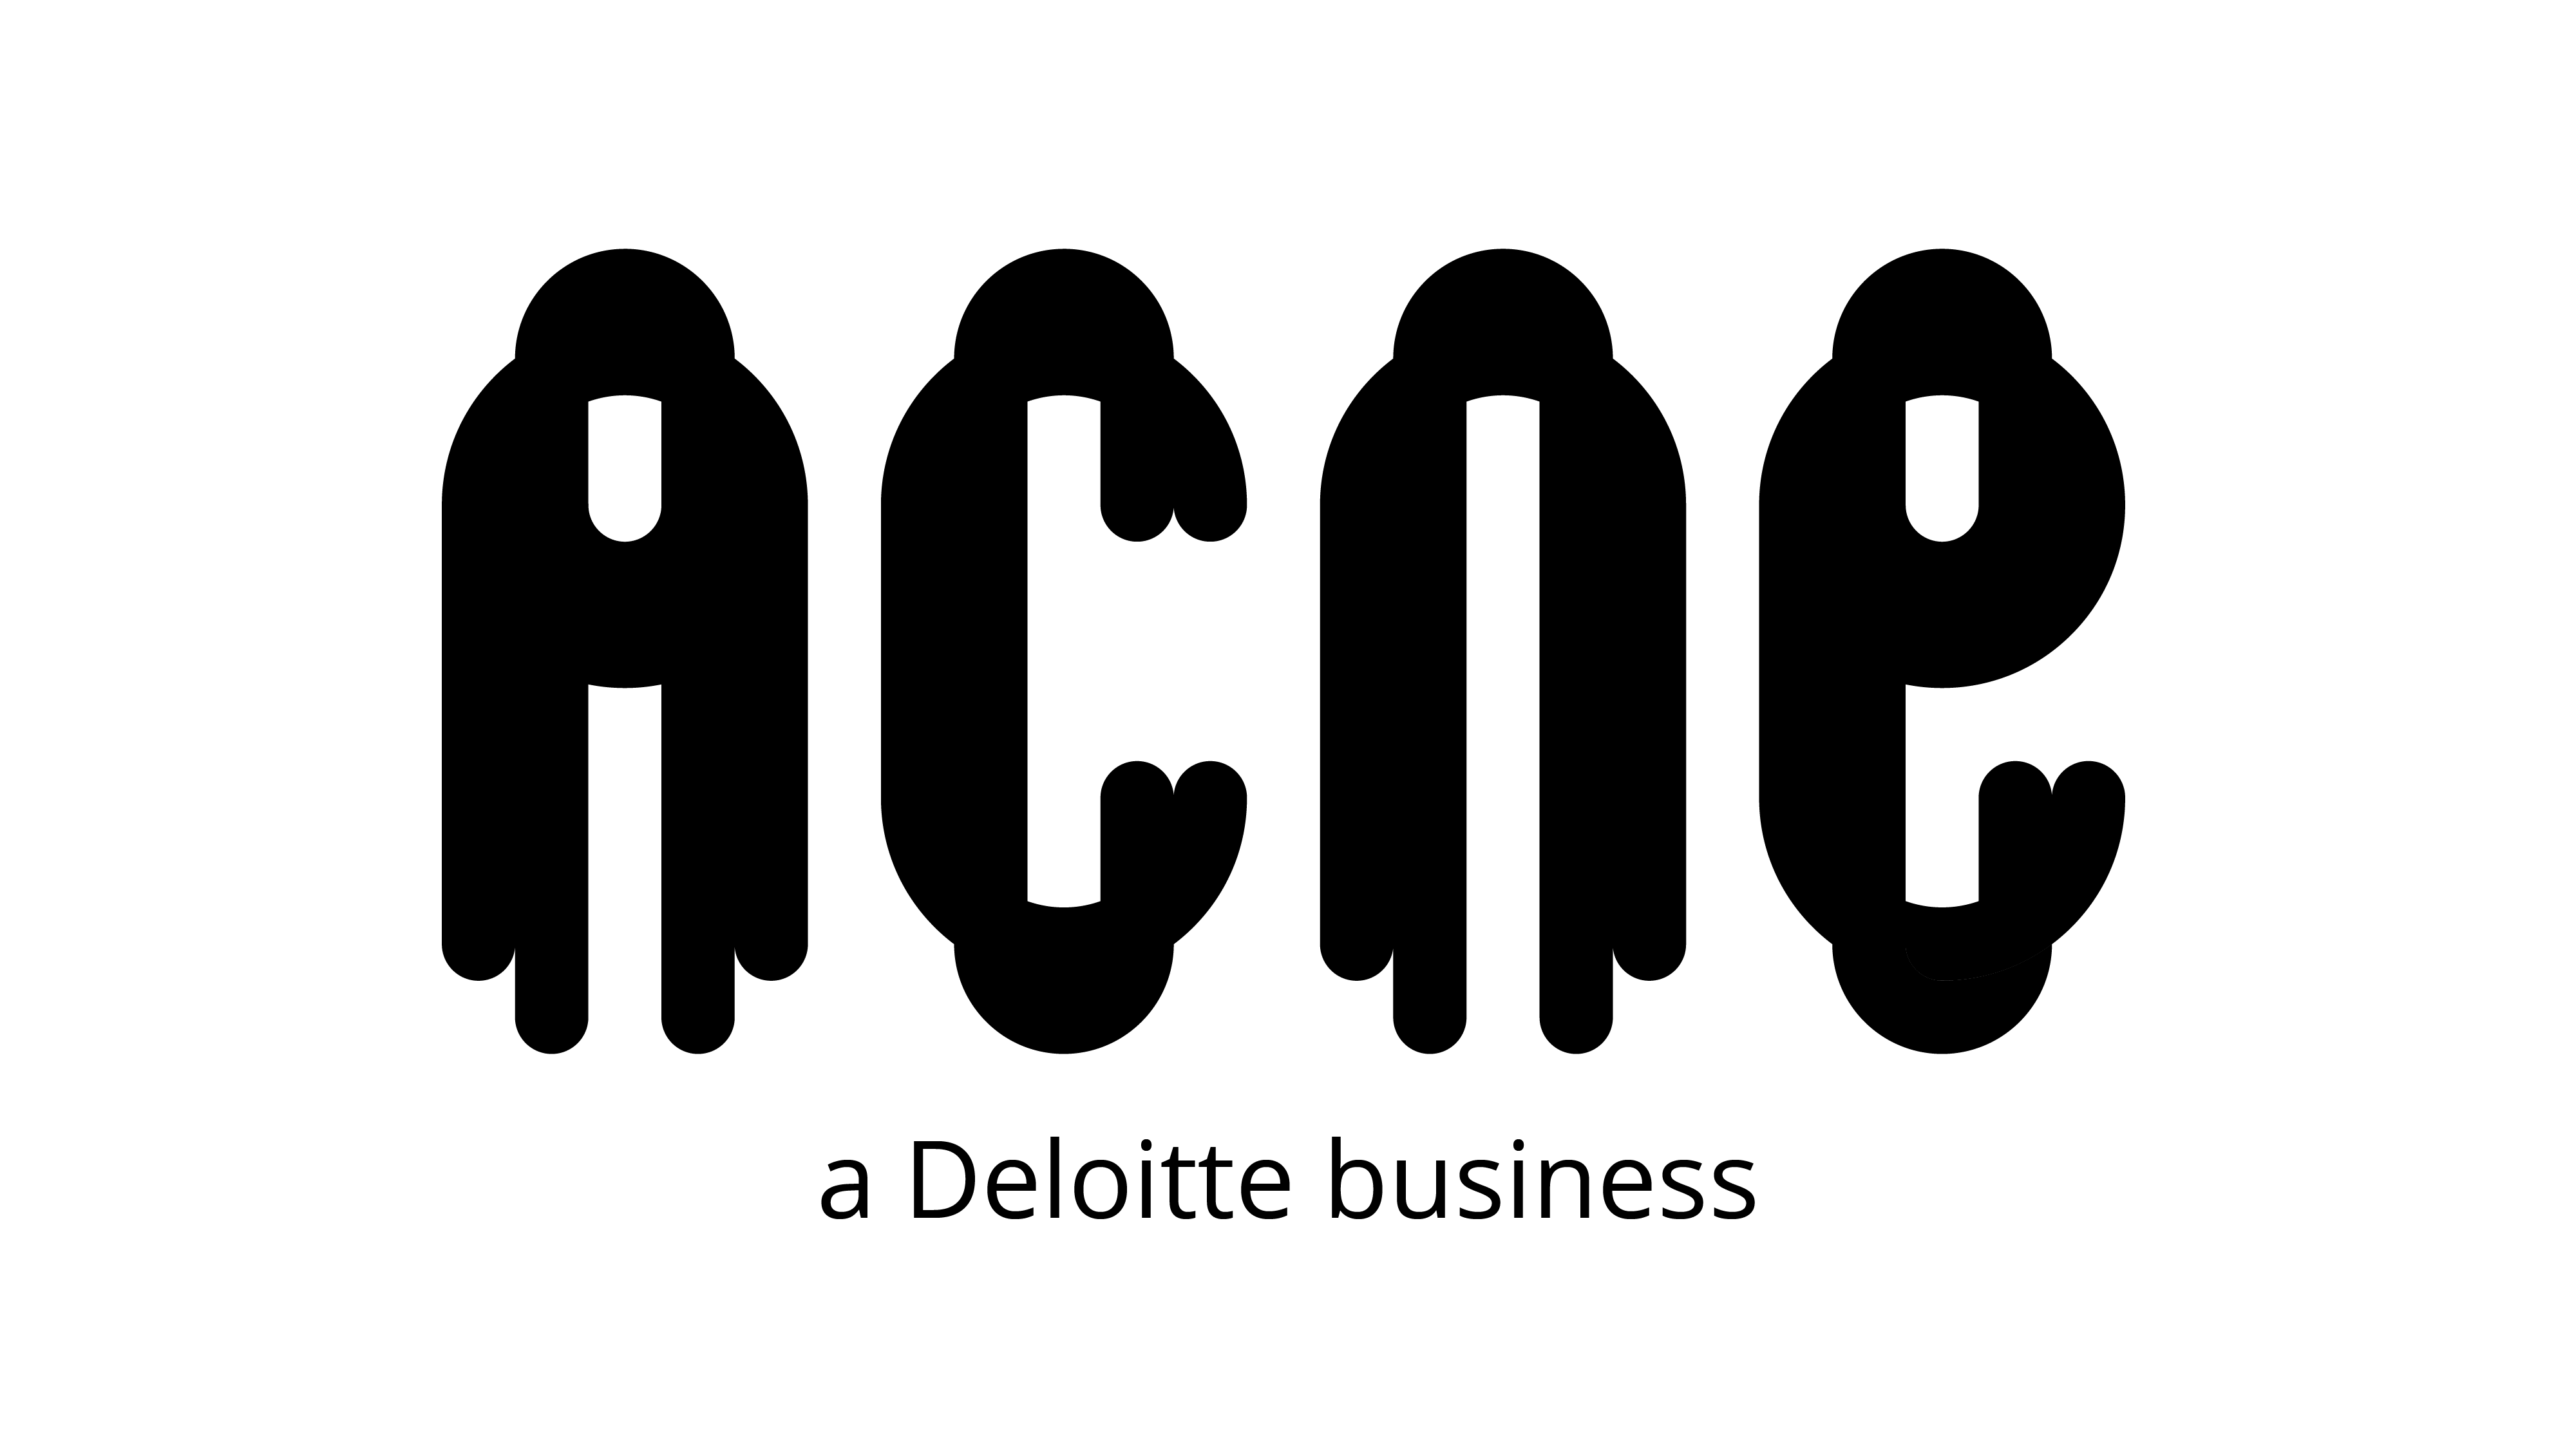 ACNE Logo